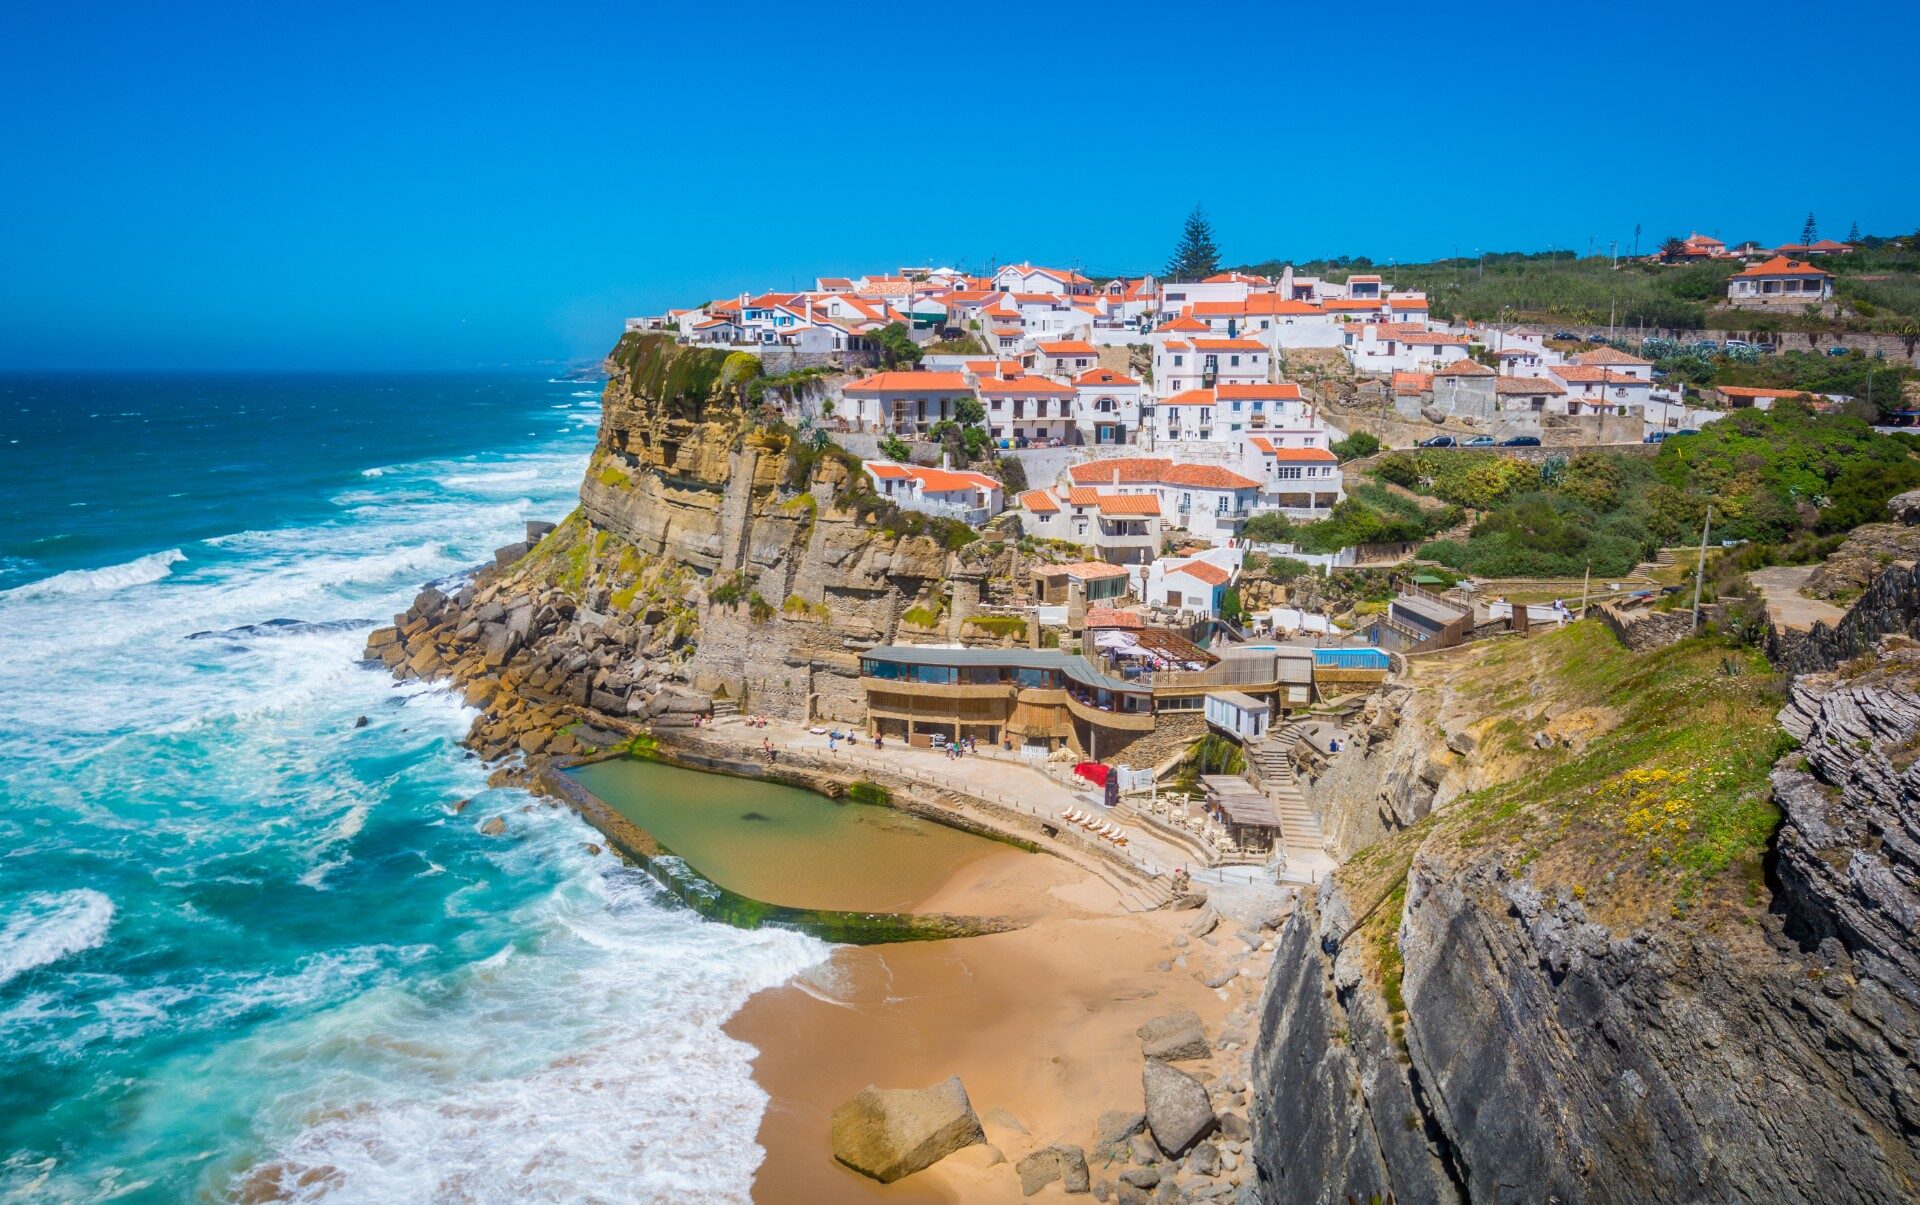 Europe's finest beach towns for easy coastal breaks